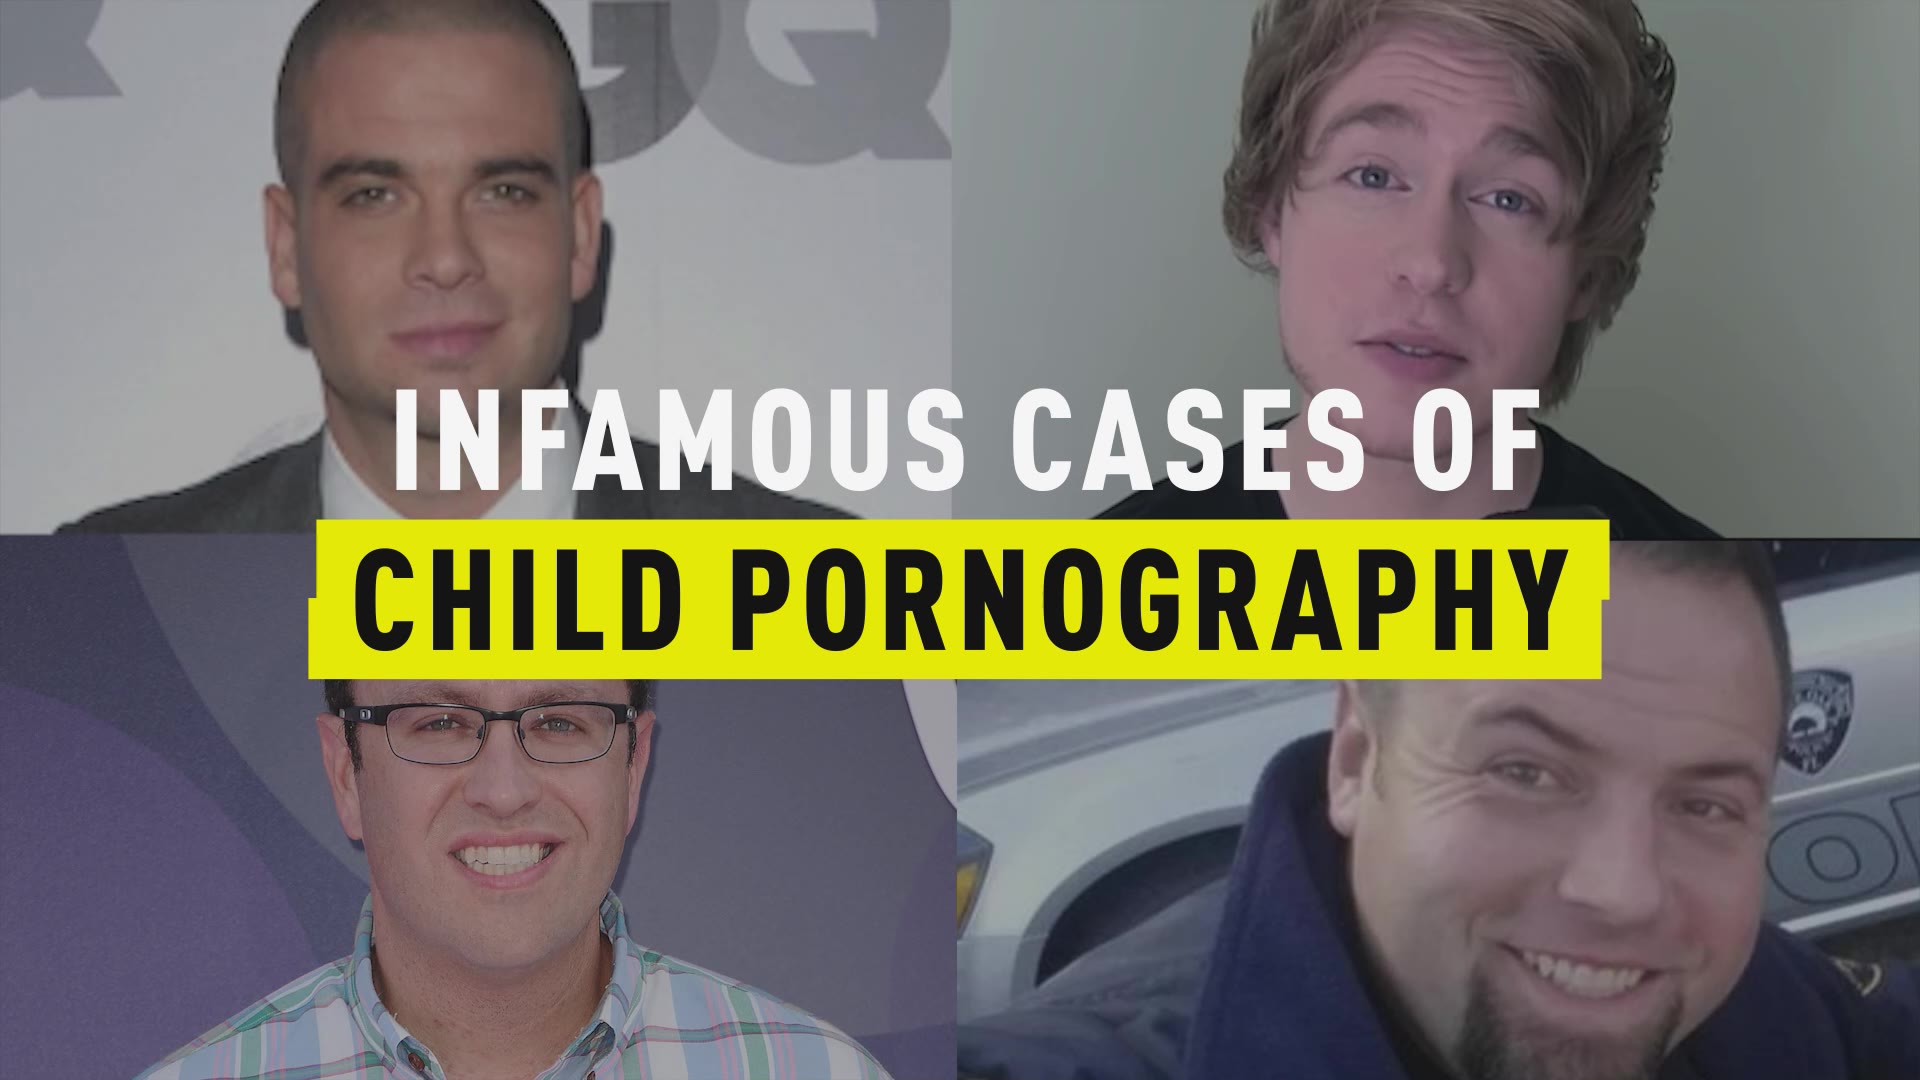 Murder Porn Meme - Infamous Cases of Child Pornography